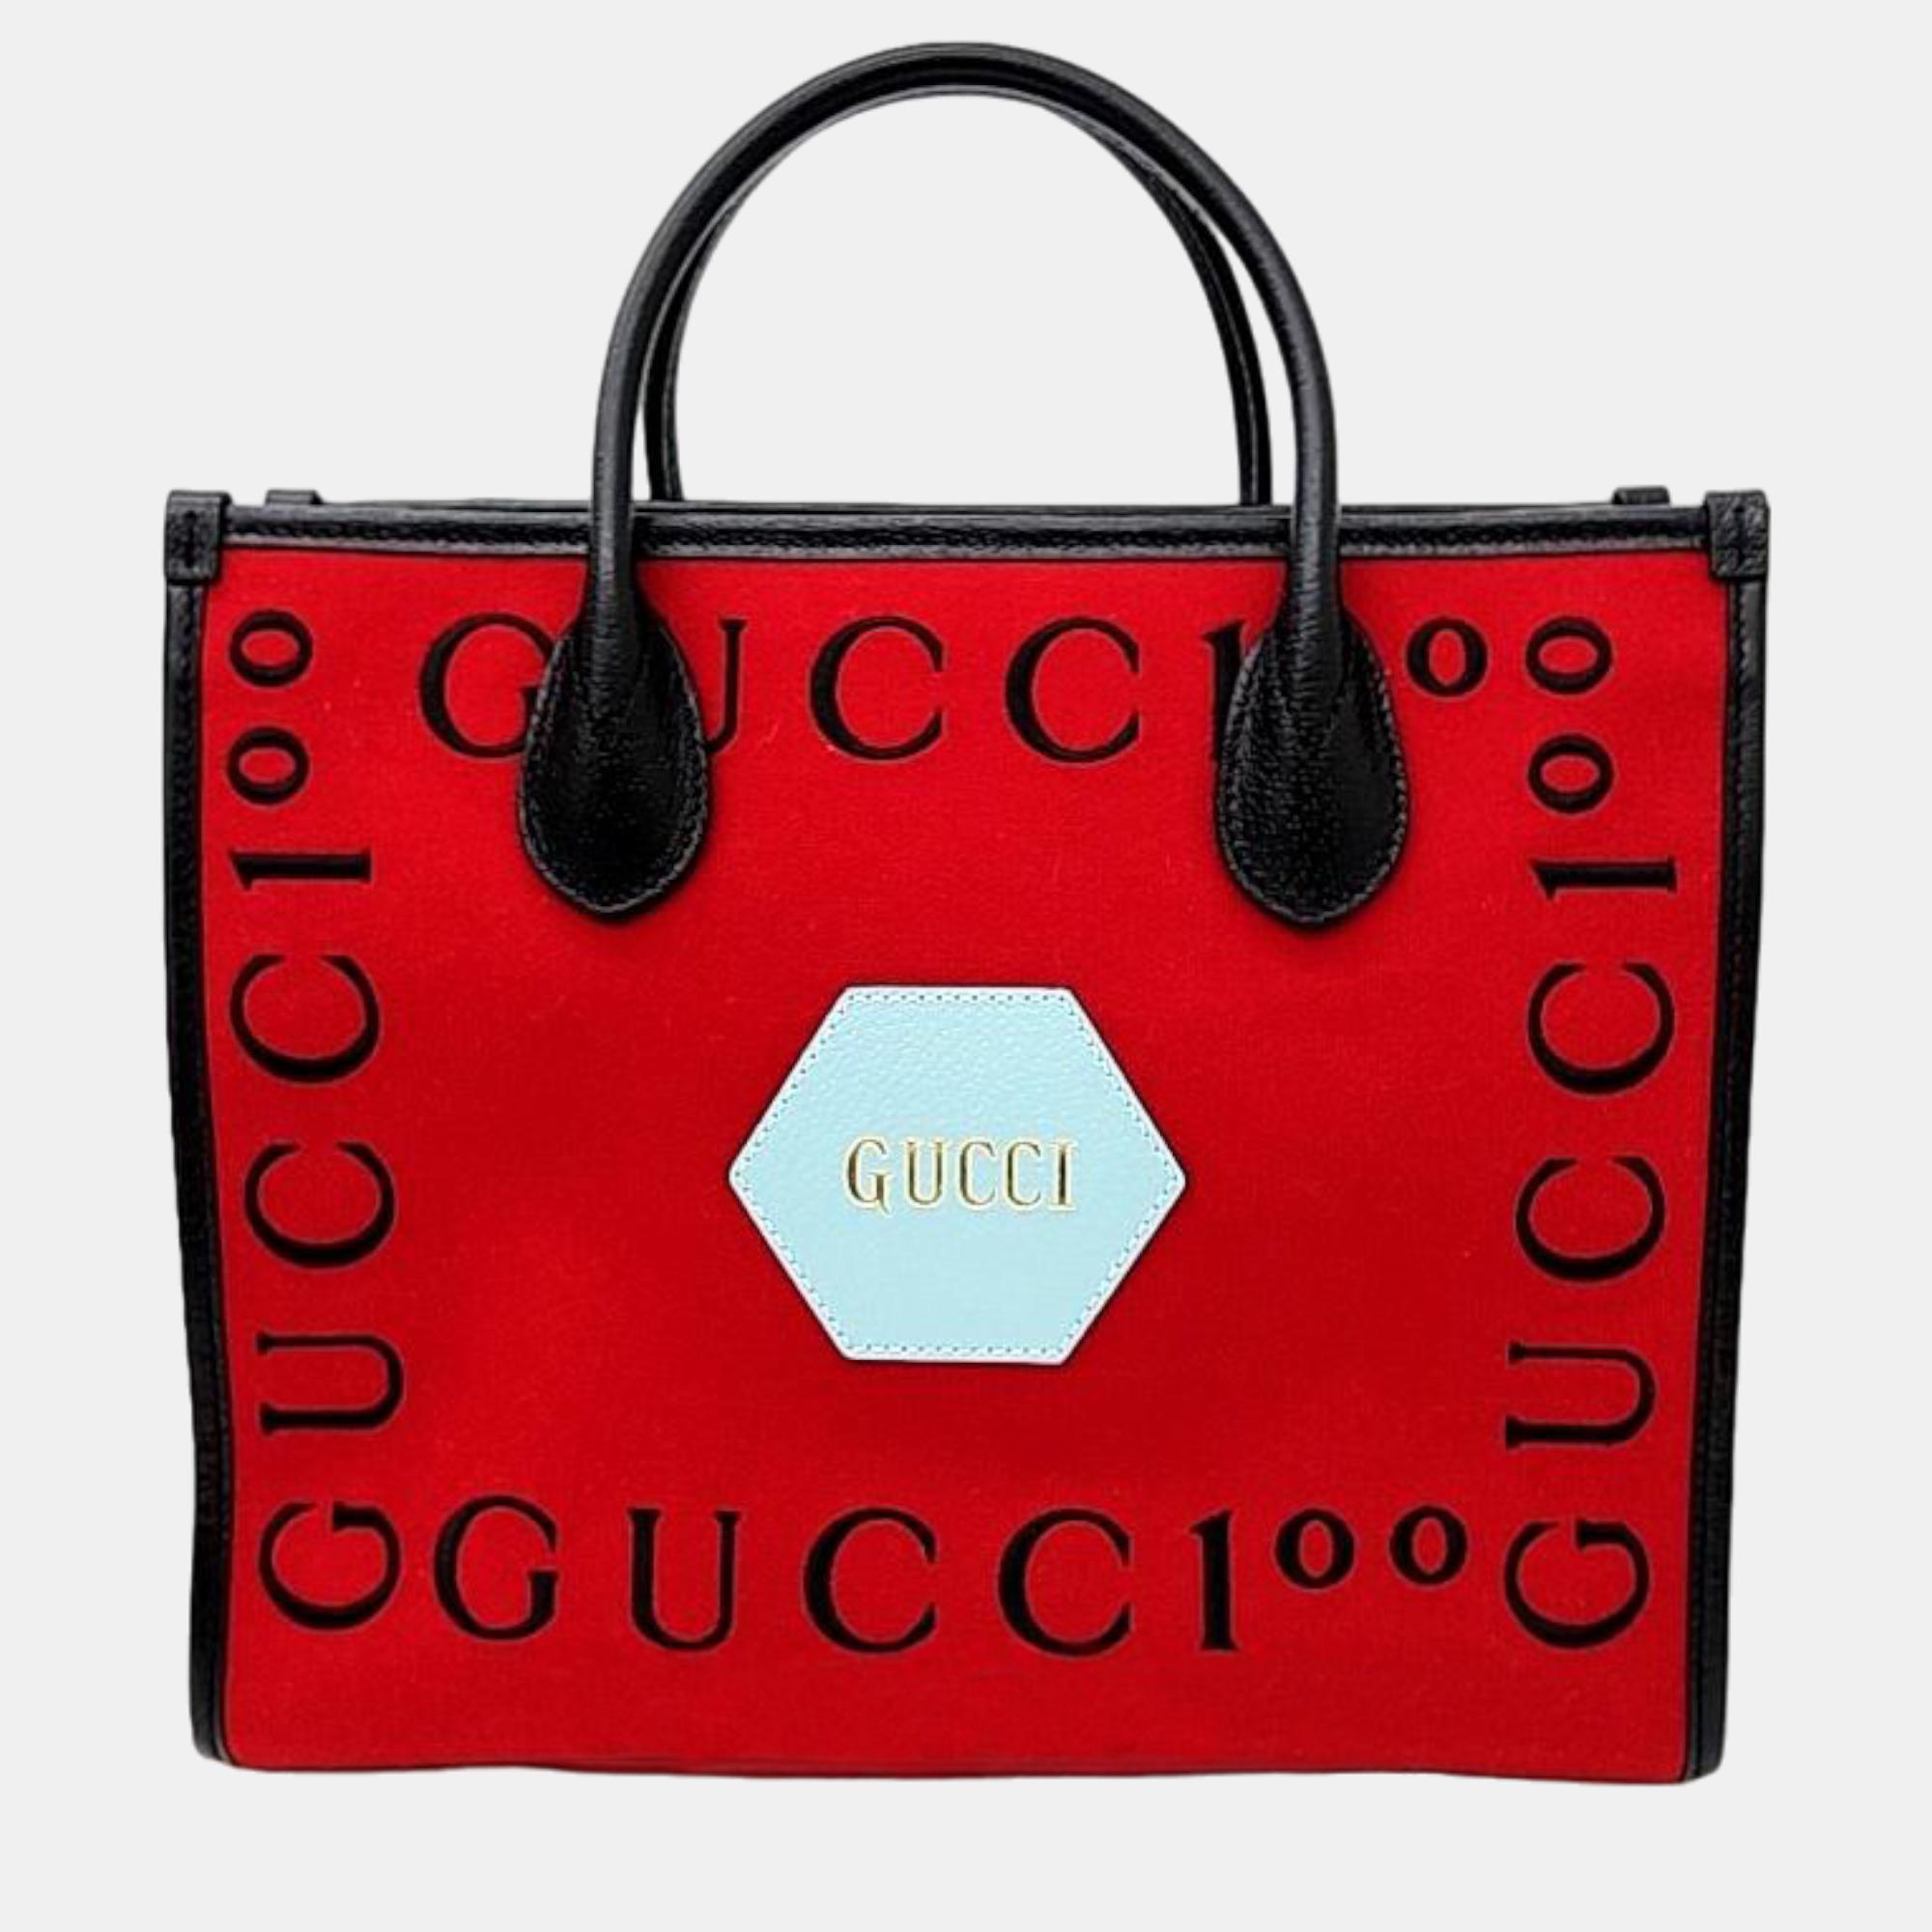 Gucci red black fabric 100 small tote bag (659983)